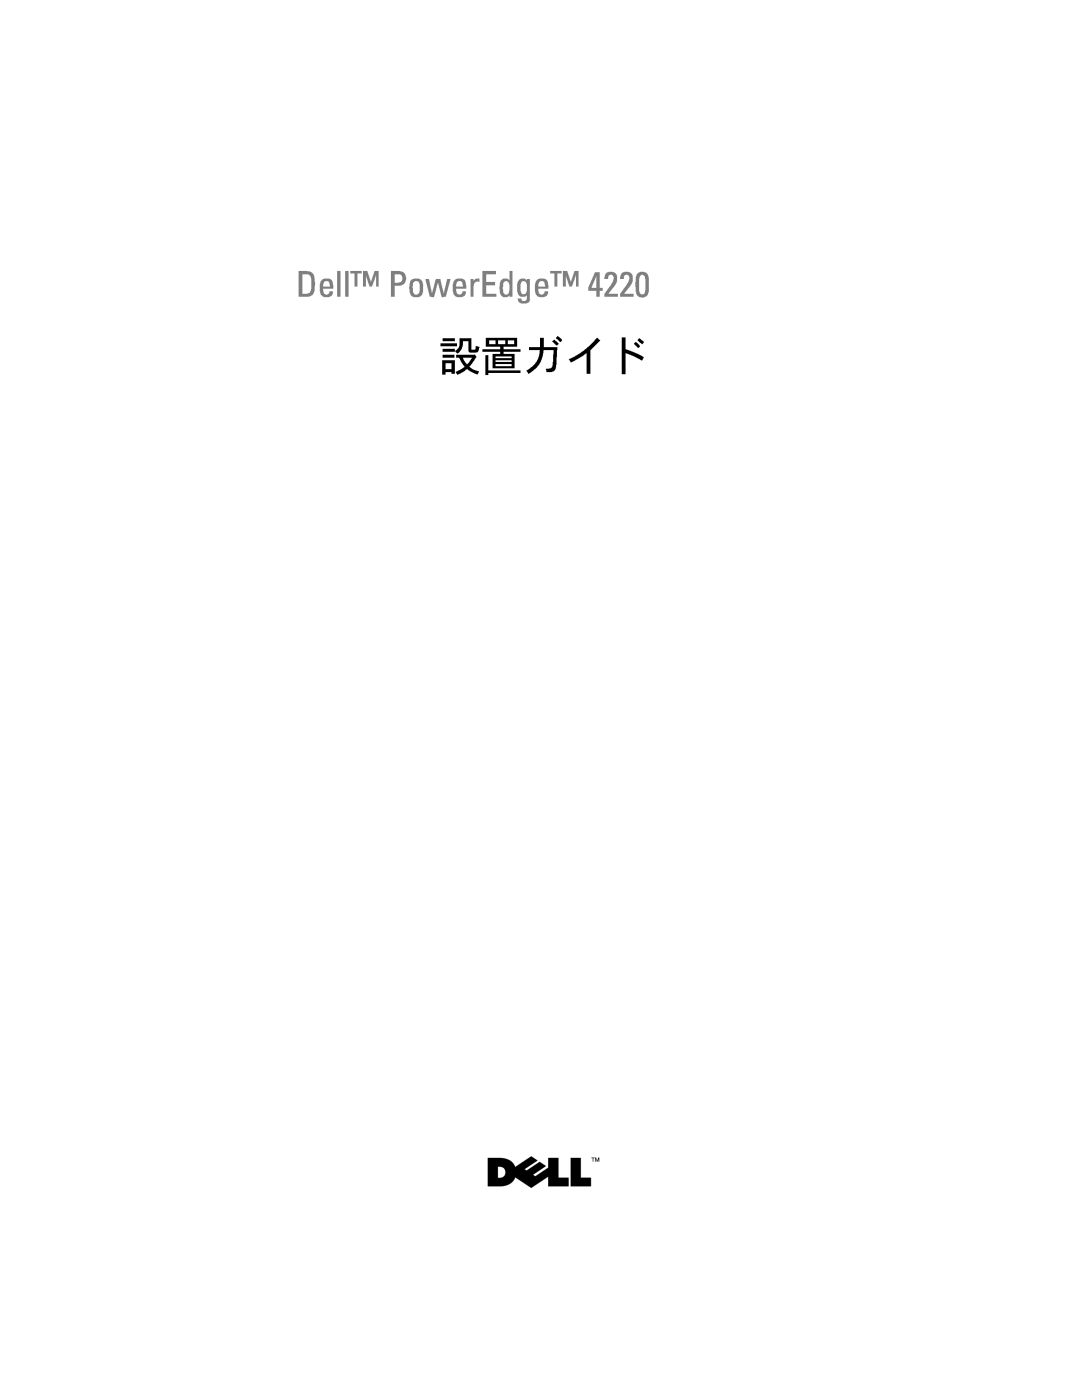 Dell 4220 manual 設置ガイド, Dell PowerEdge 